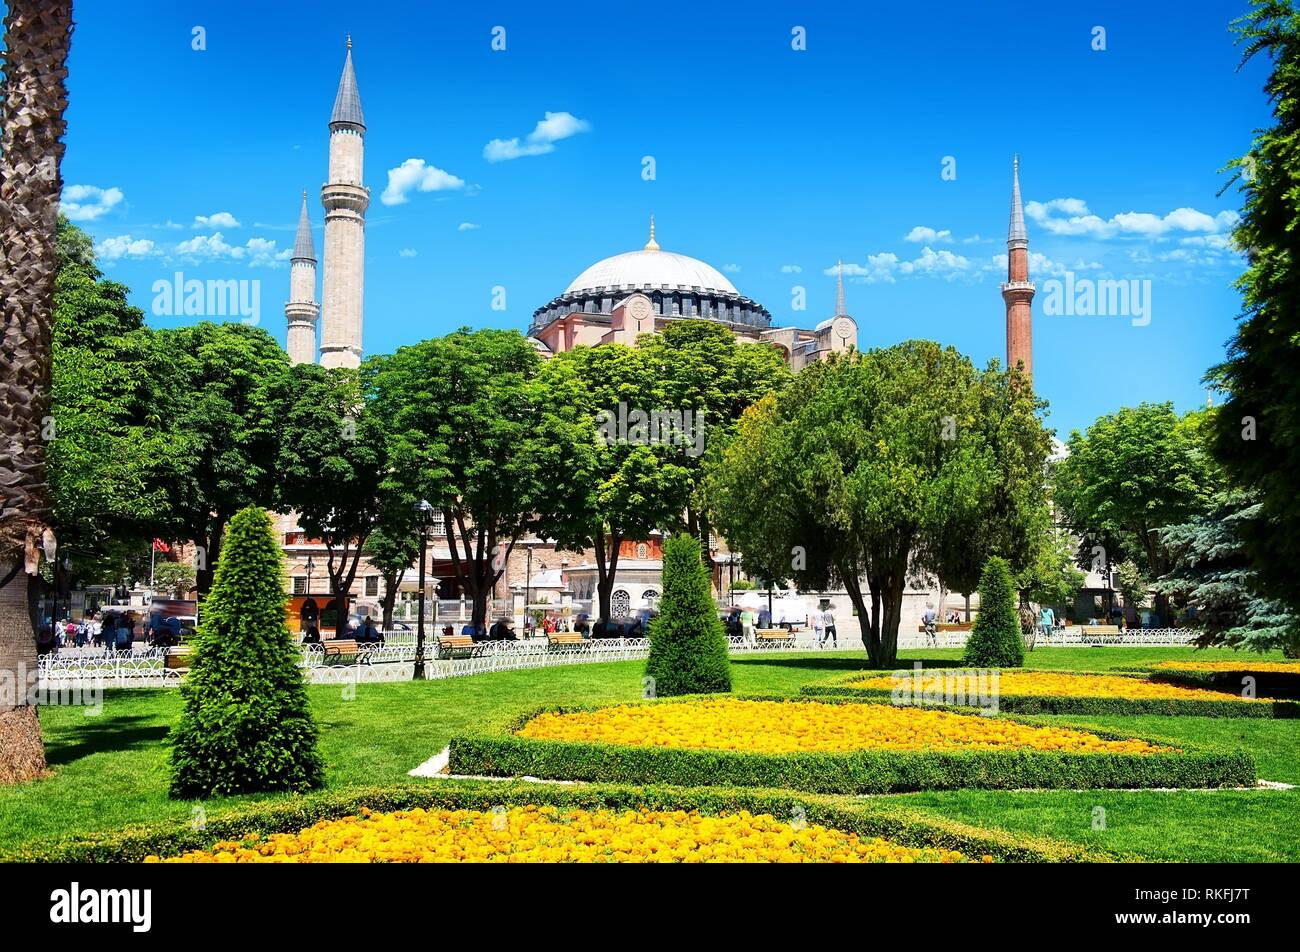 Summer park near Hagia Sophia in Istanbul, Turkey. Stock Photo